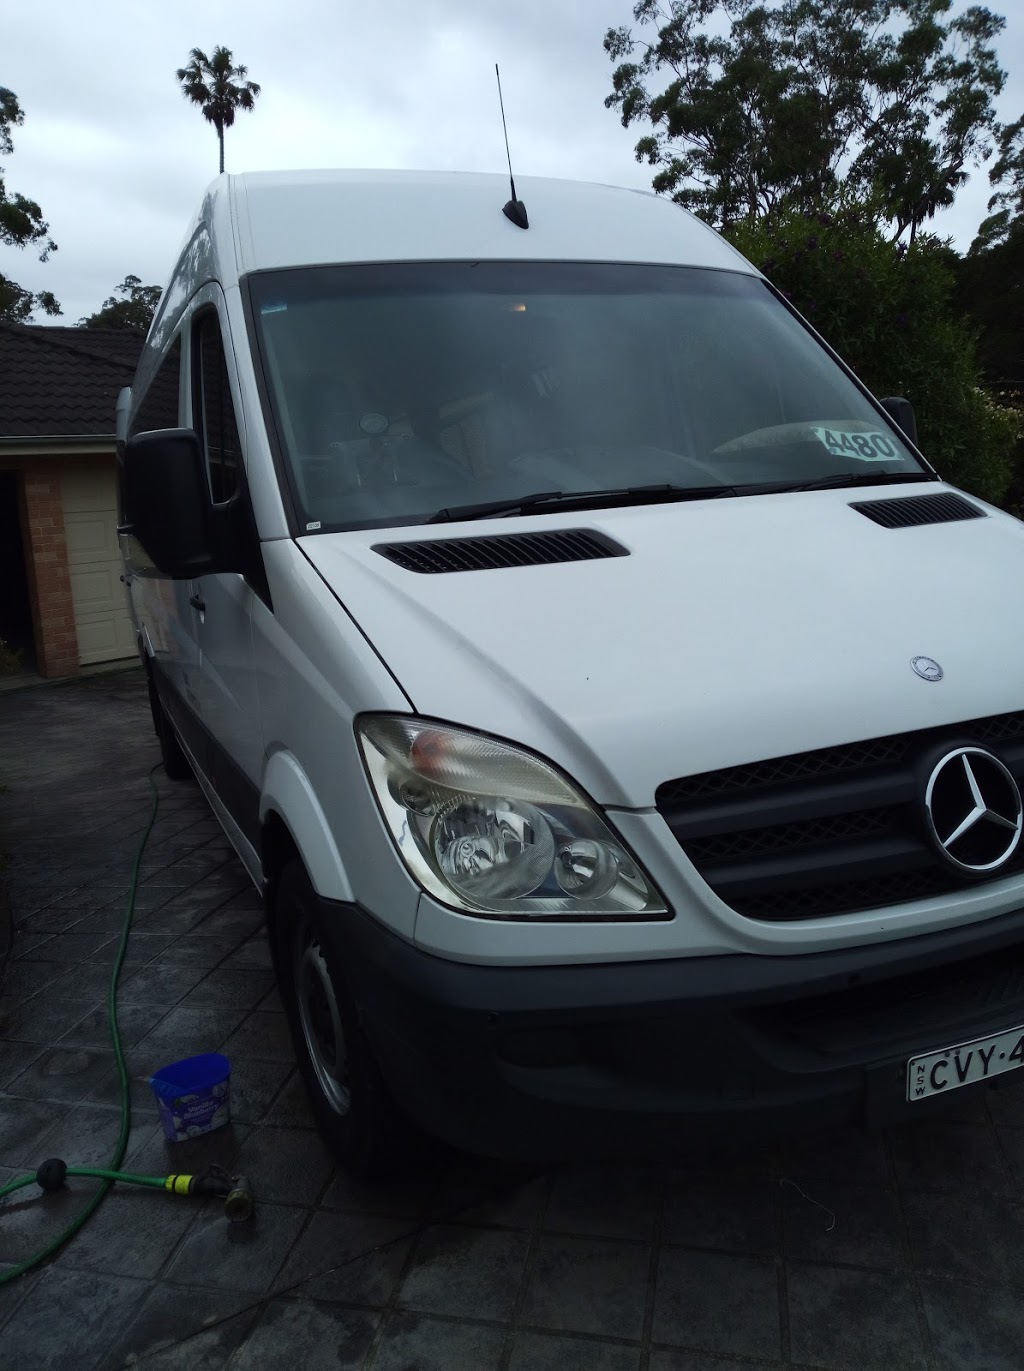 Adairs Bus and Van Hire | car rental | 4 Luke Cl, West Gosford NSW 2250, Australia | 0243404030 OR +61 2 4340 4030